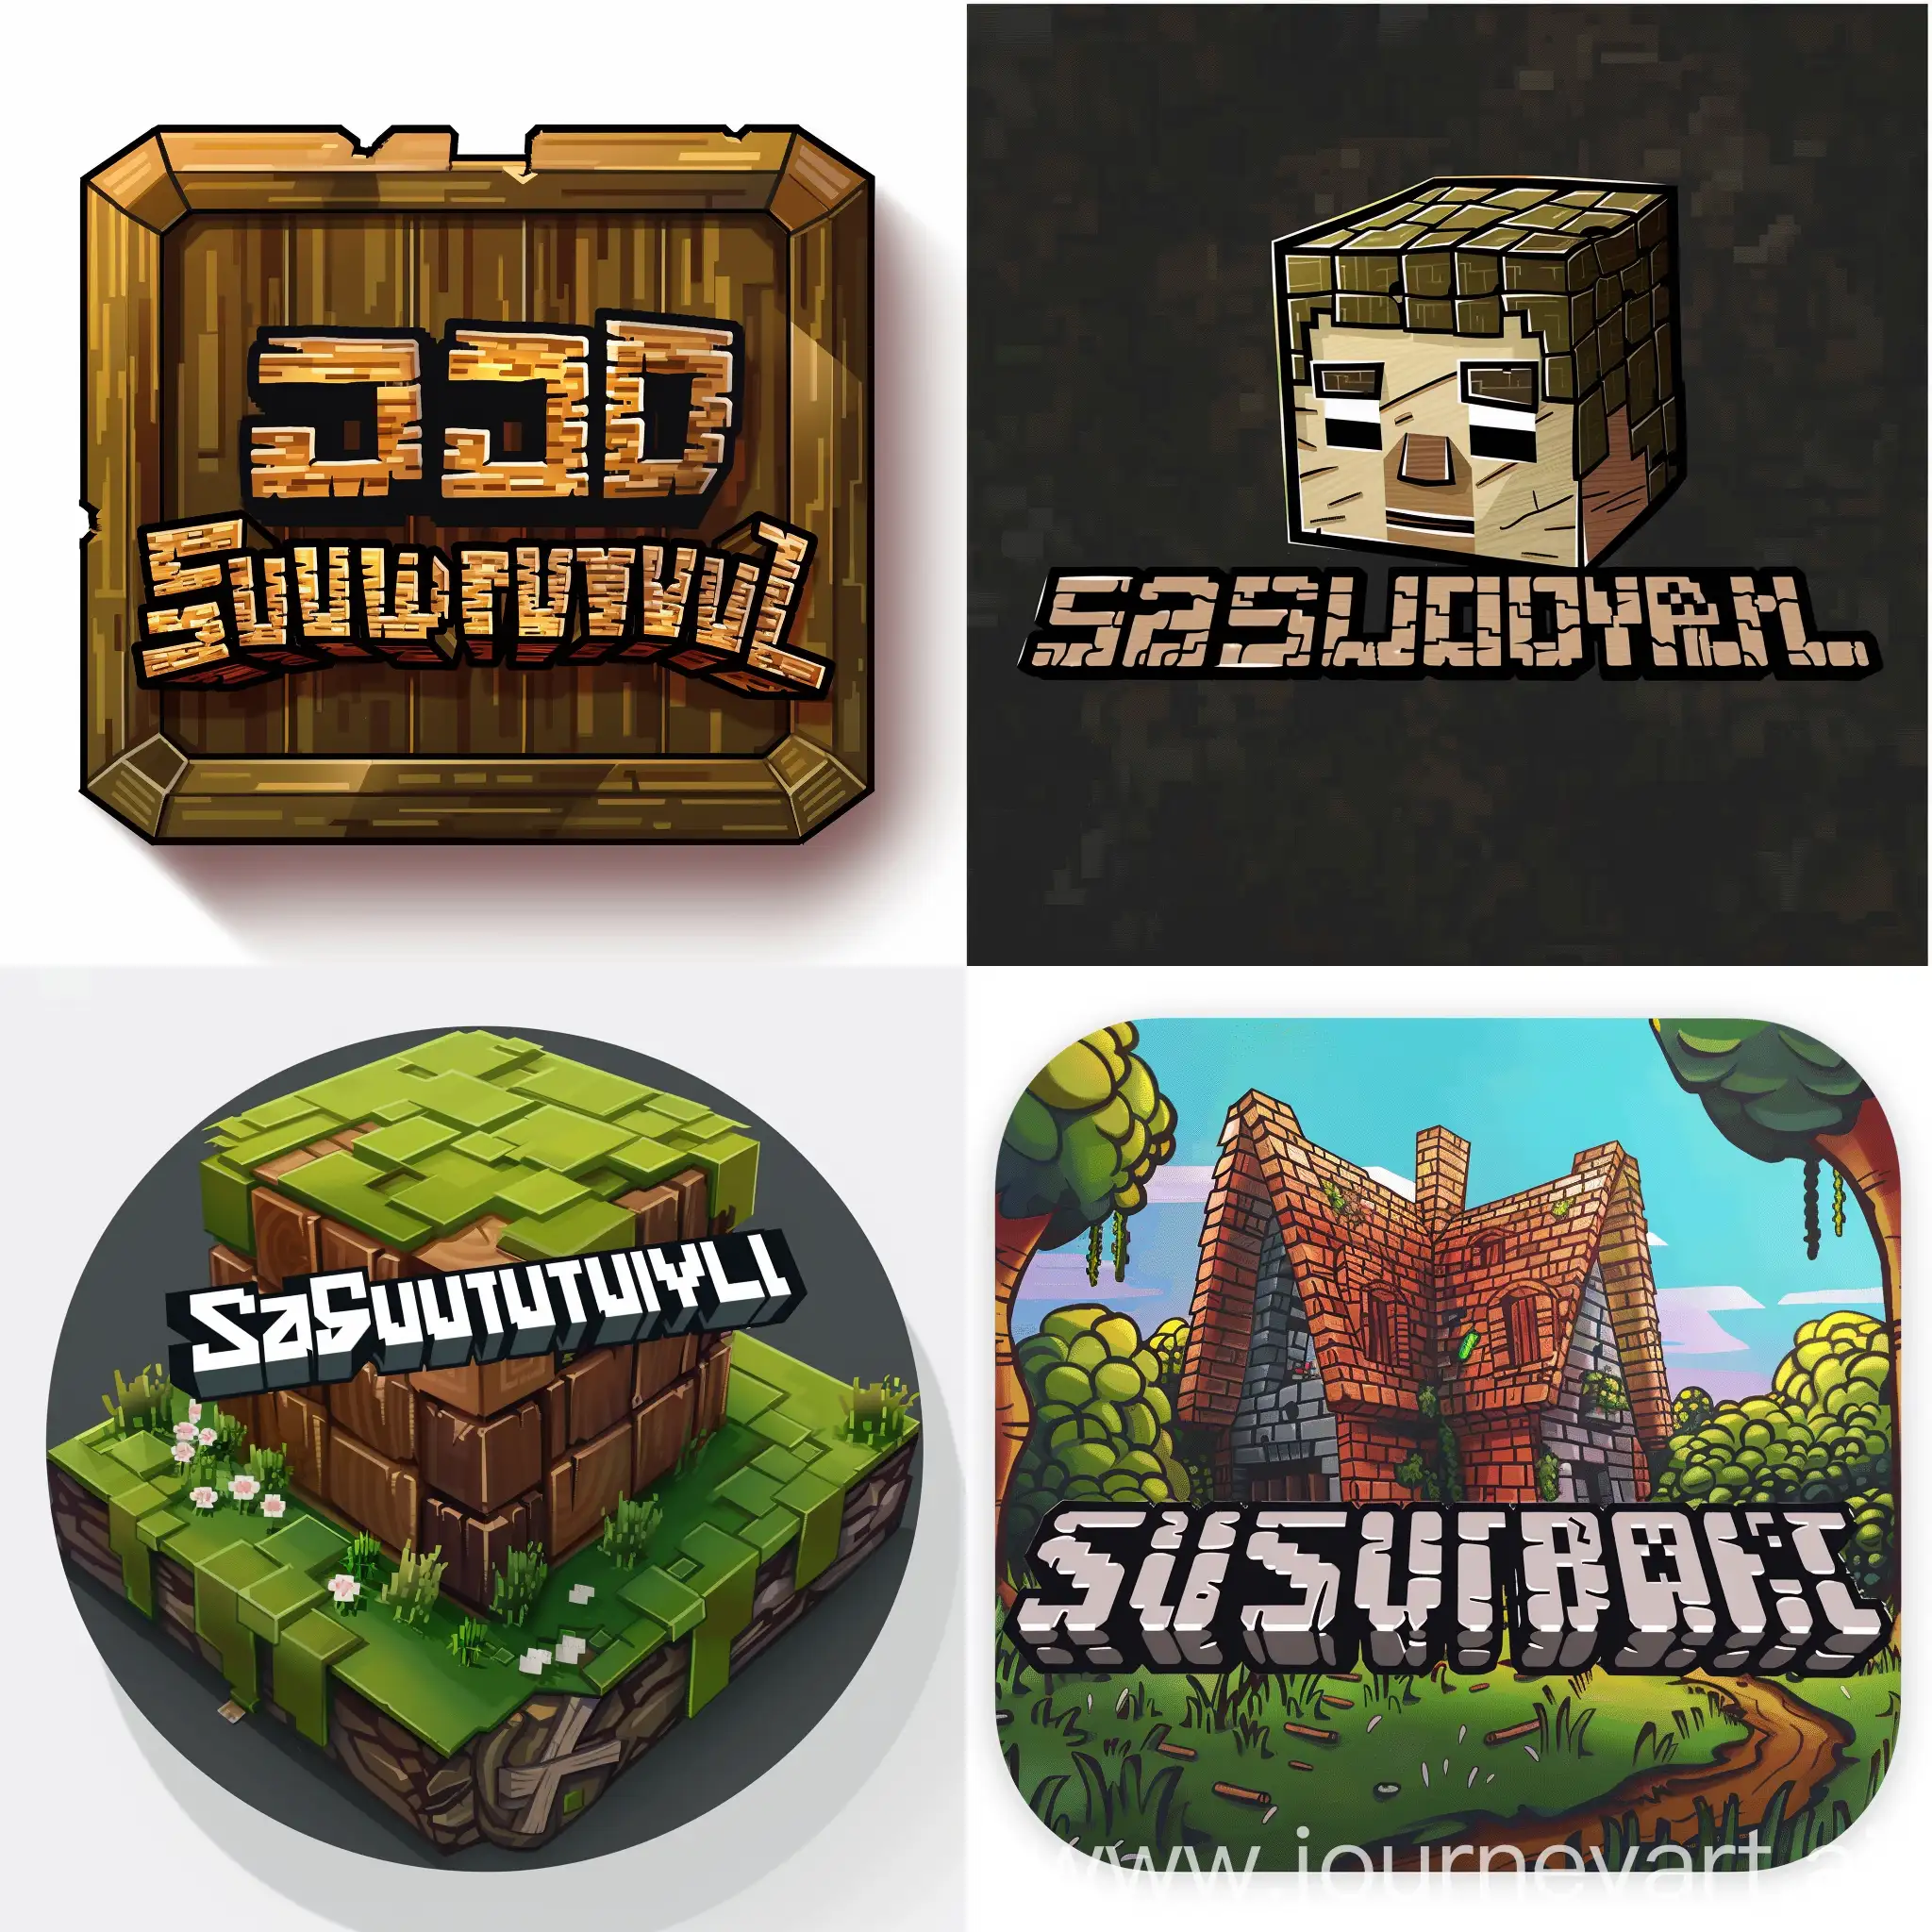 SadSurvival-Minecraft-Server-Logotype-with-Version-6-and-Aspect-Ratio-11